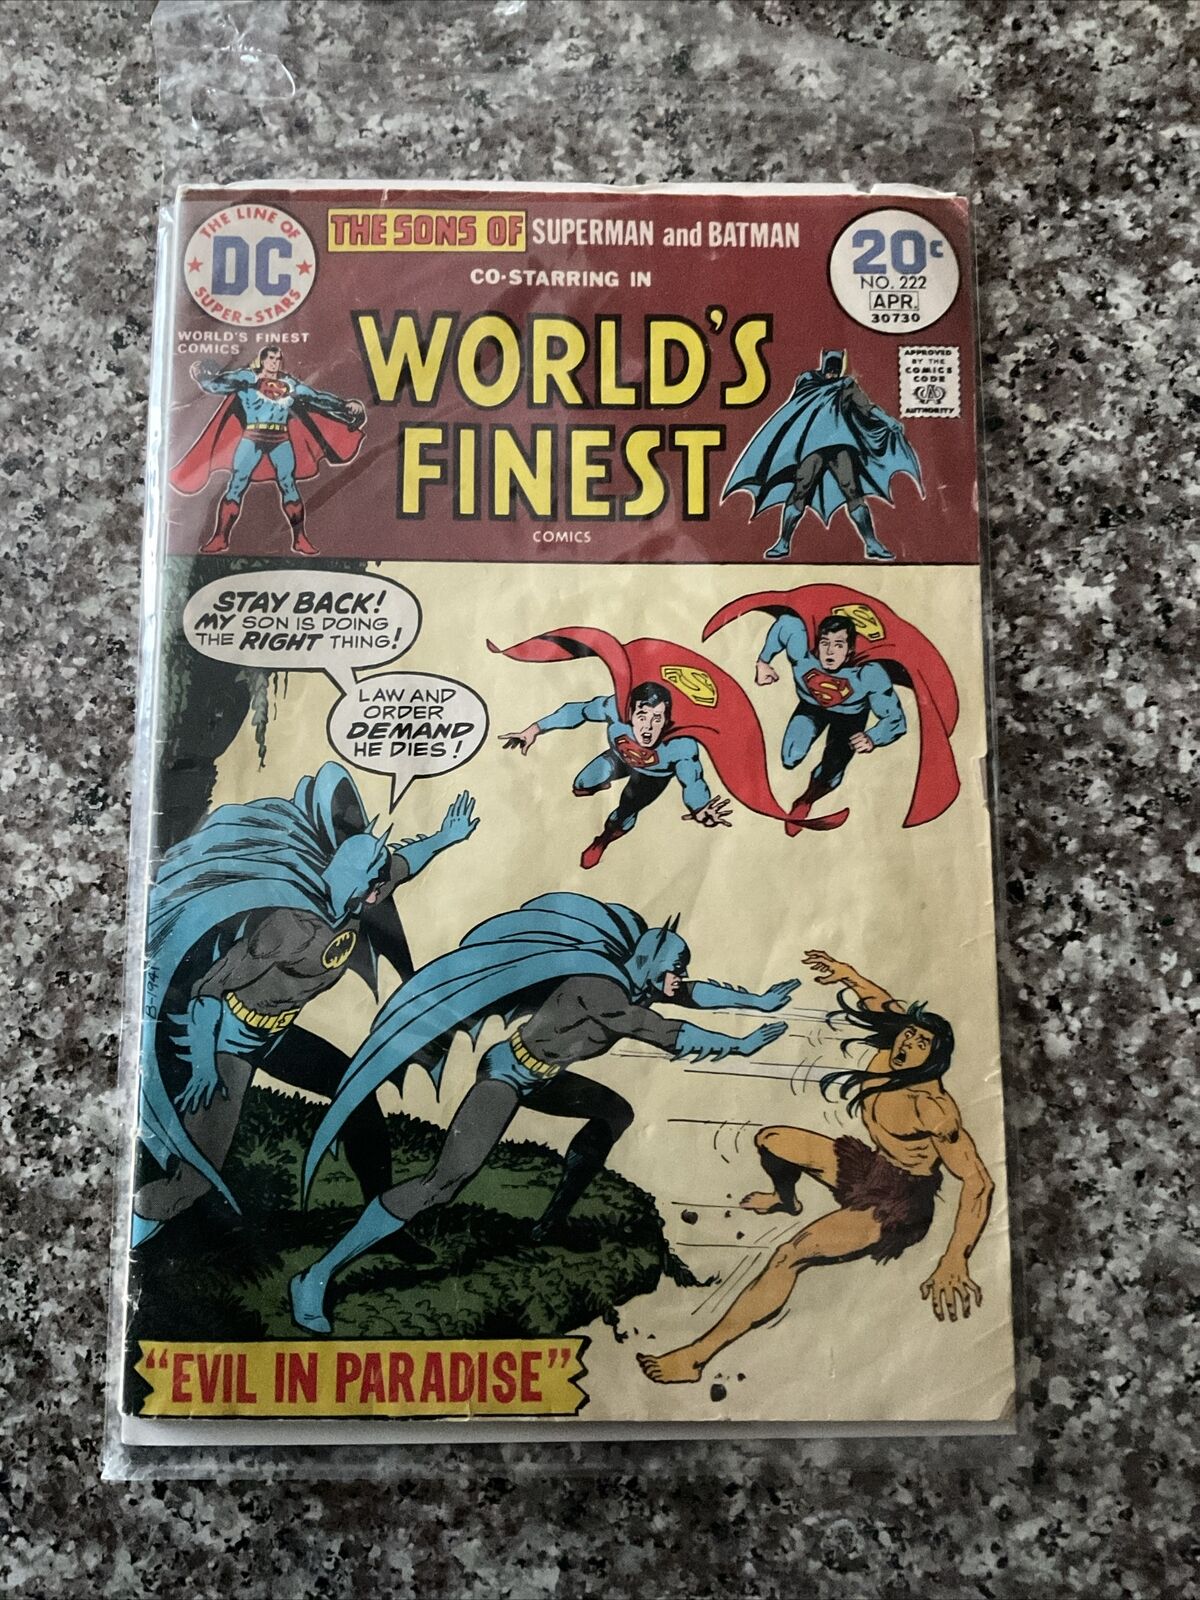 1974, Worlds Finest #222 DC 3rd Appearance Super Sons Of Superman & Batman.